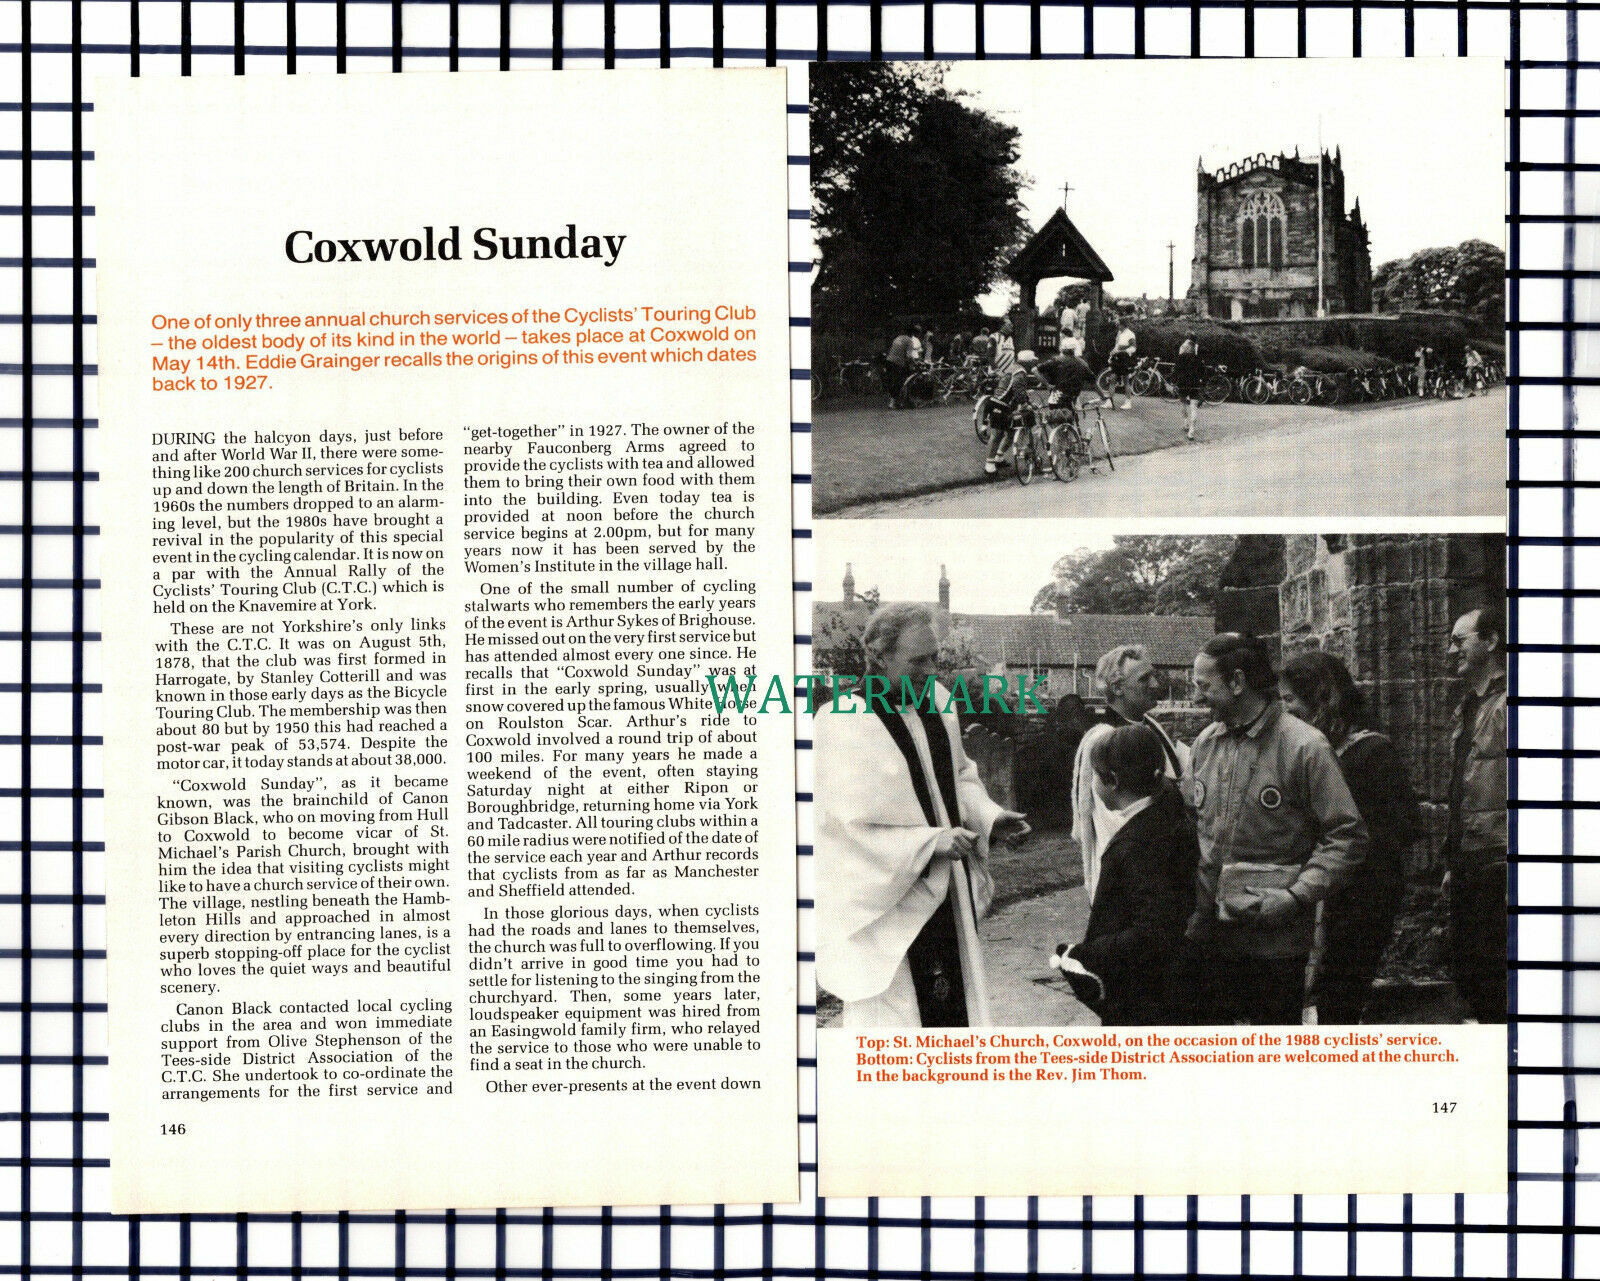 (7065) Coxwold Cyclists Touring Club Rev Jim Thom  - 1989 Article